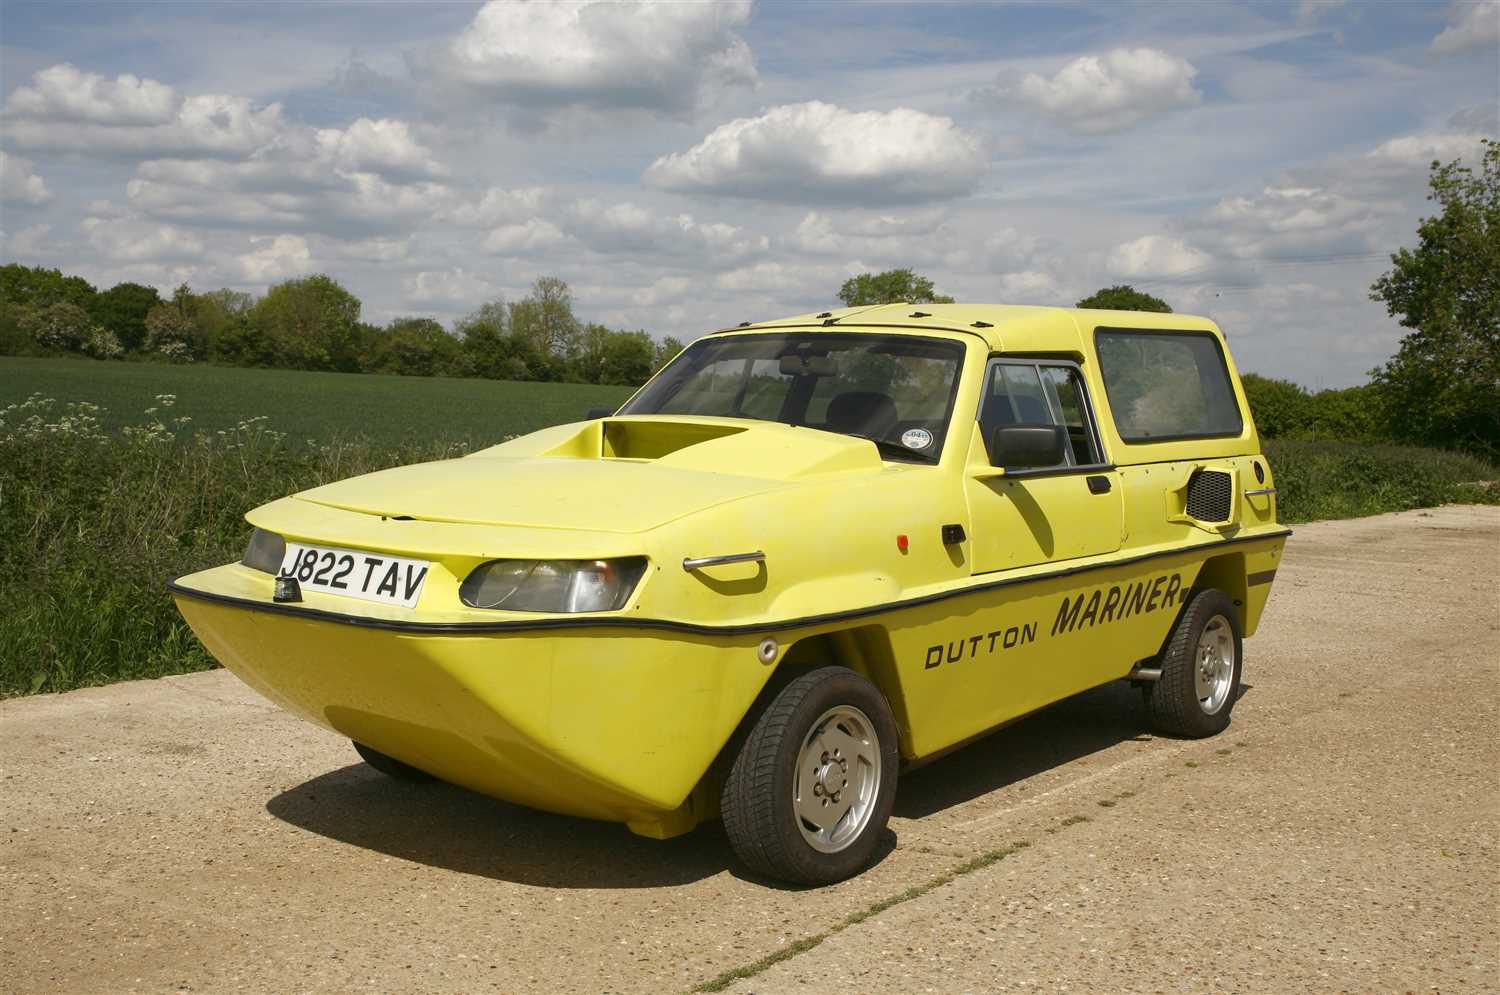 5 - 1992 Dutton Mariner (experimental vehicle)